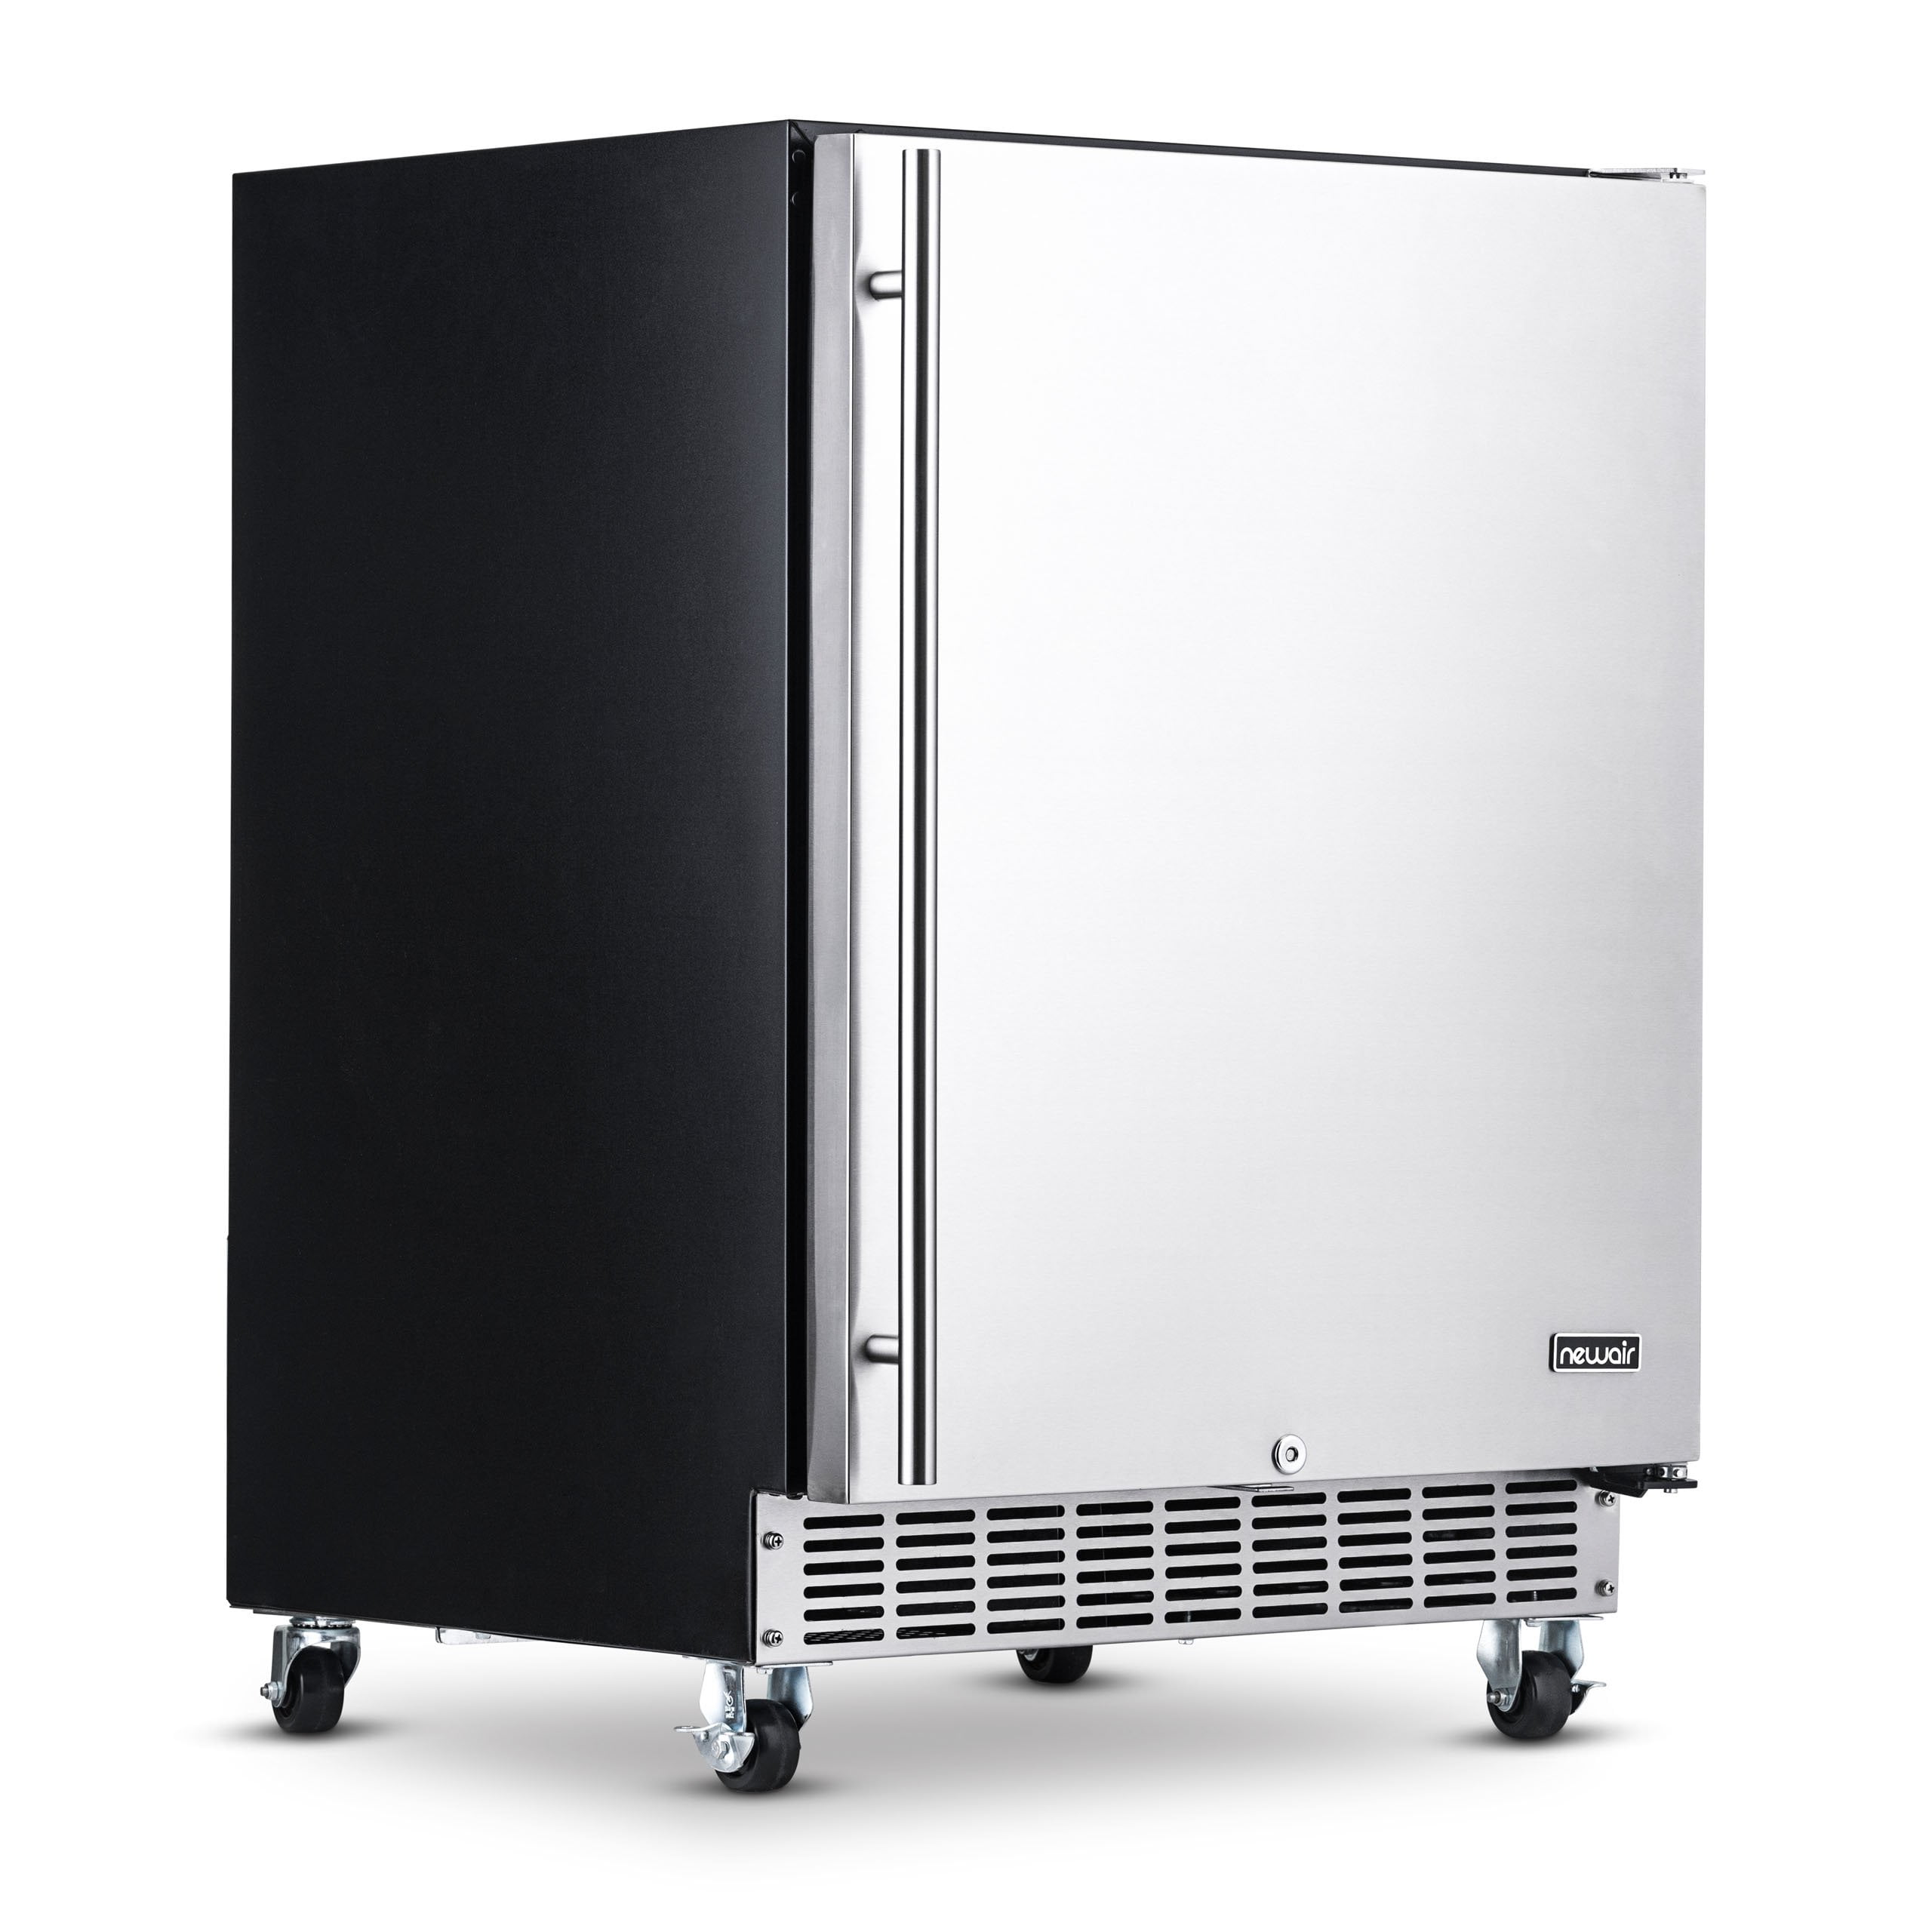 Outdoor Refrigerator All Stainless Steel Built-in Beverage Cooler 5.3 cu.ft 